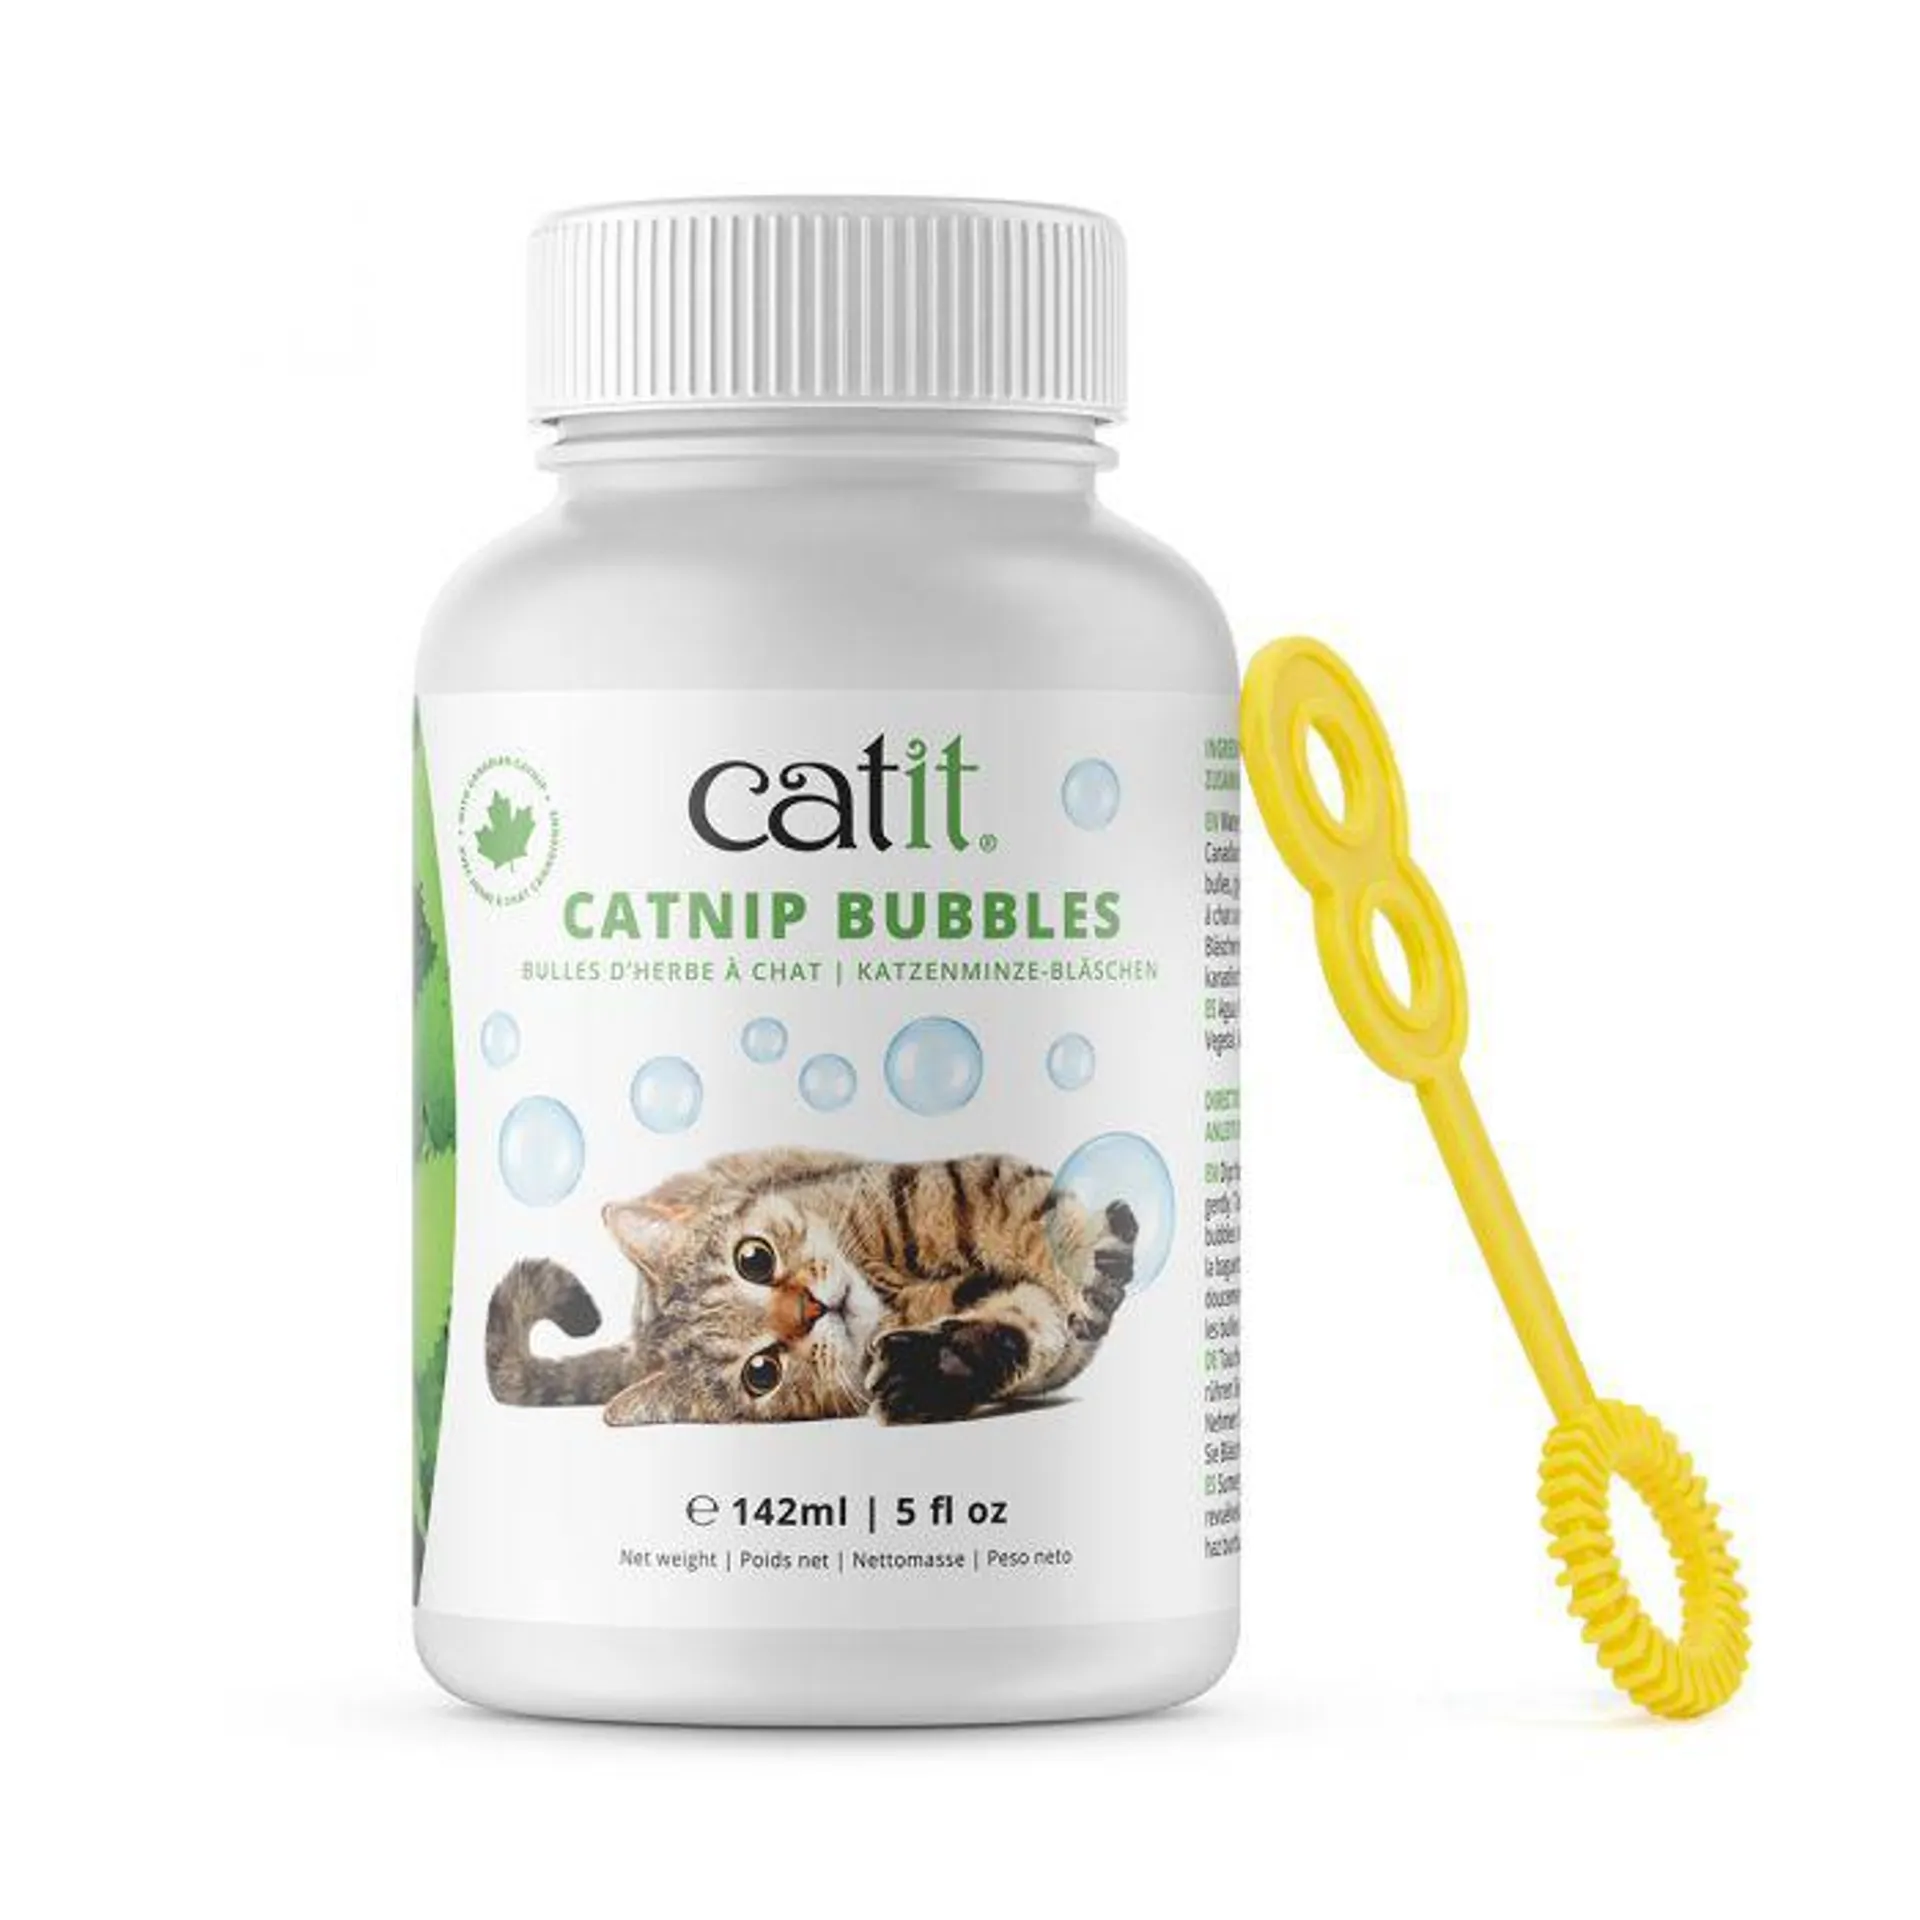 Catit Catnip Bubbles 142ml